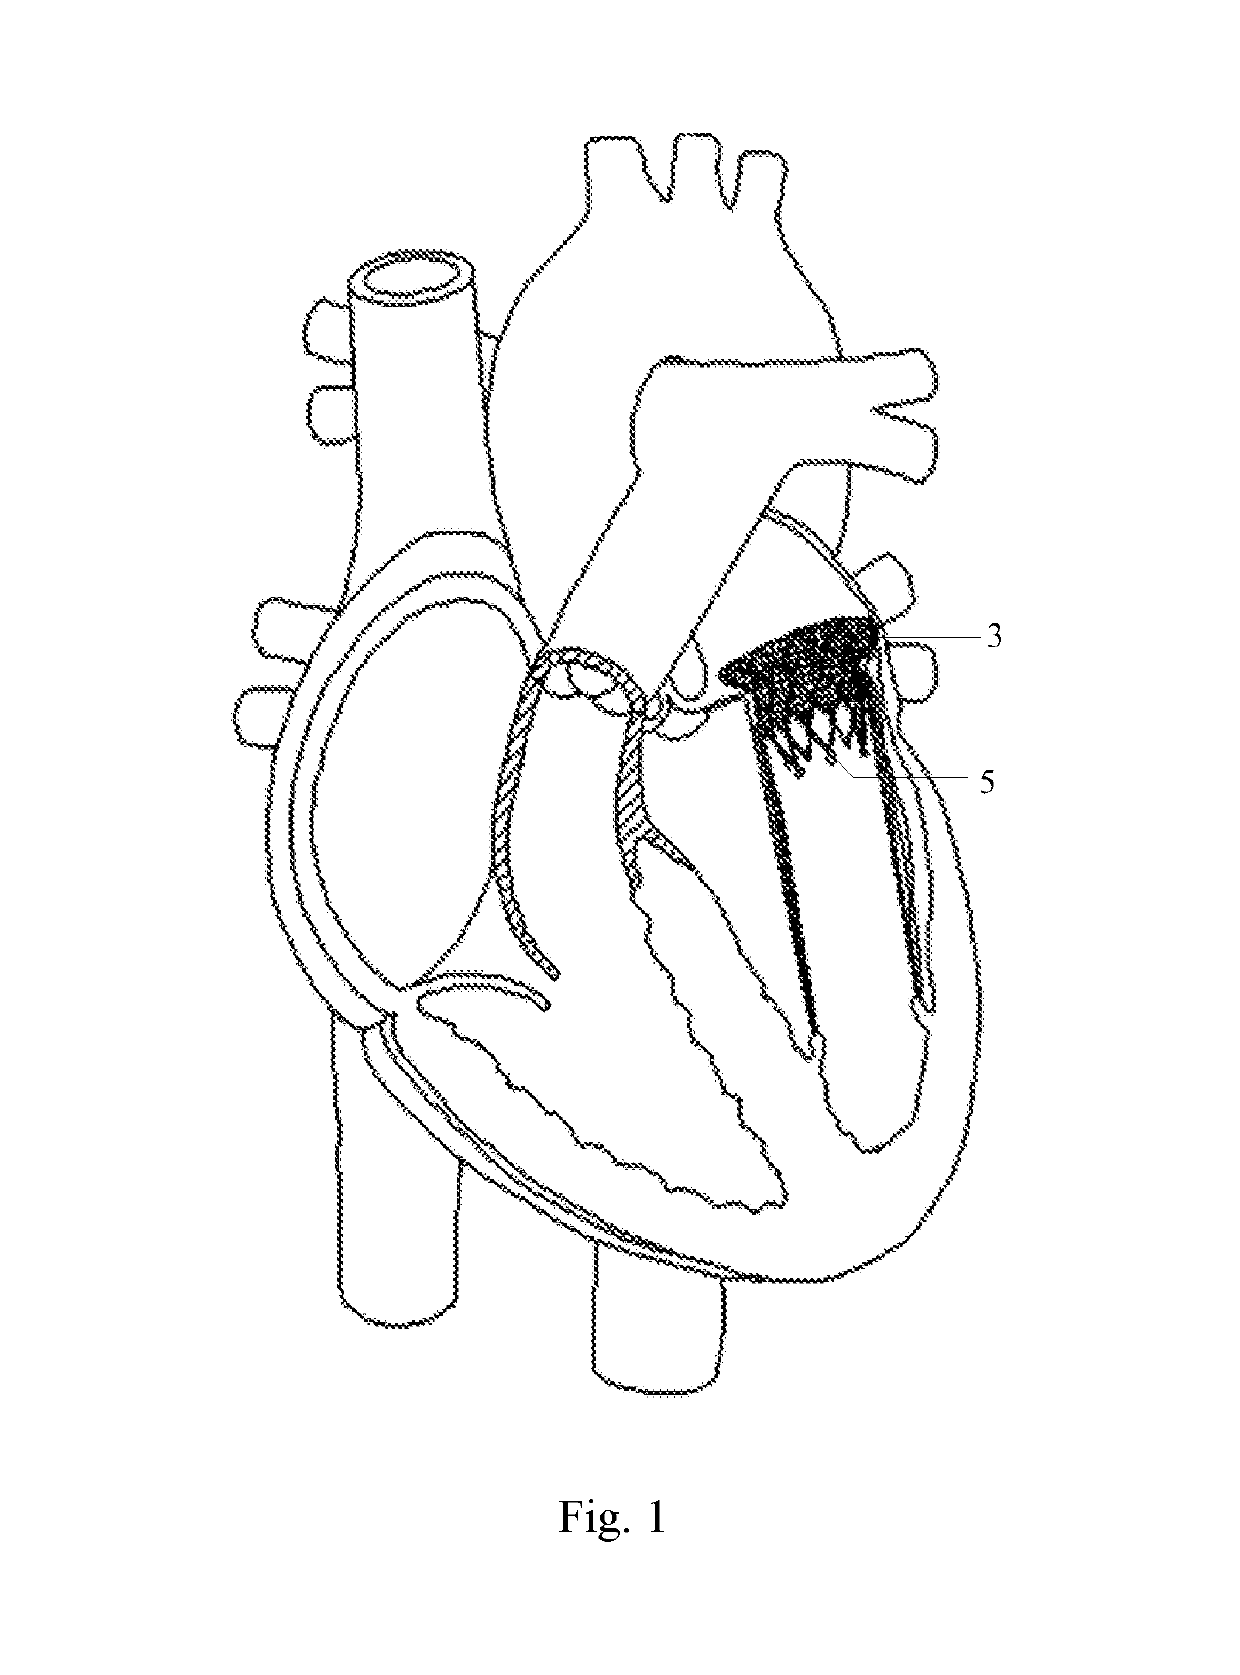 Artificial cardiac valve